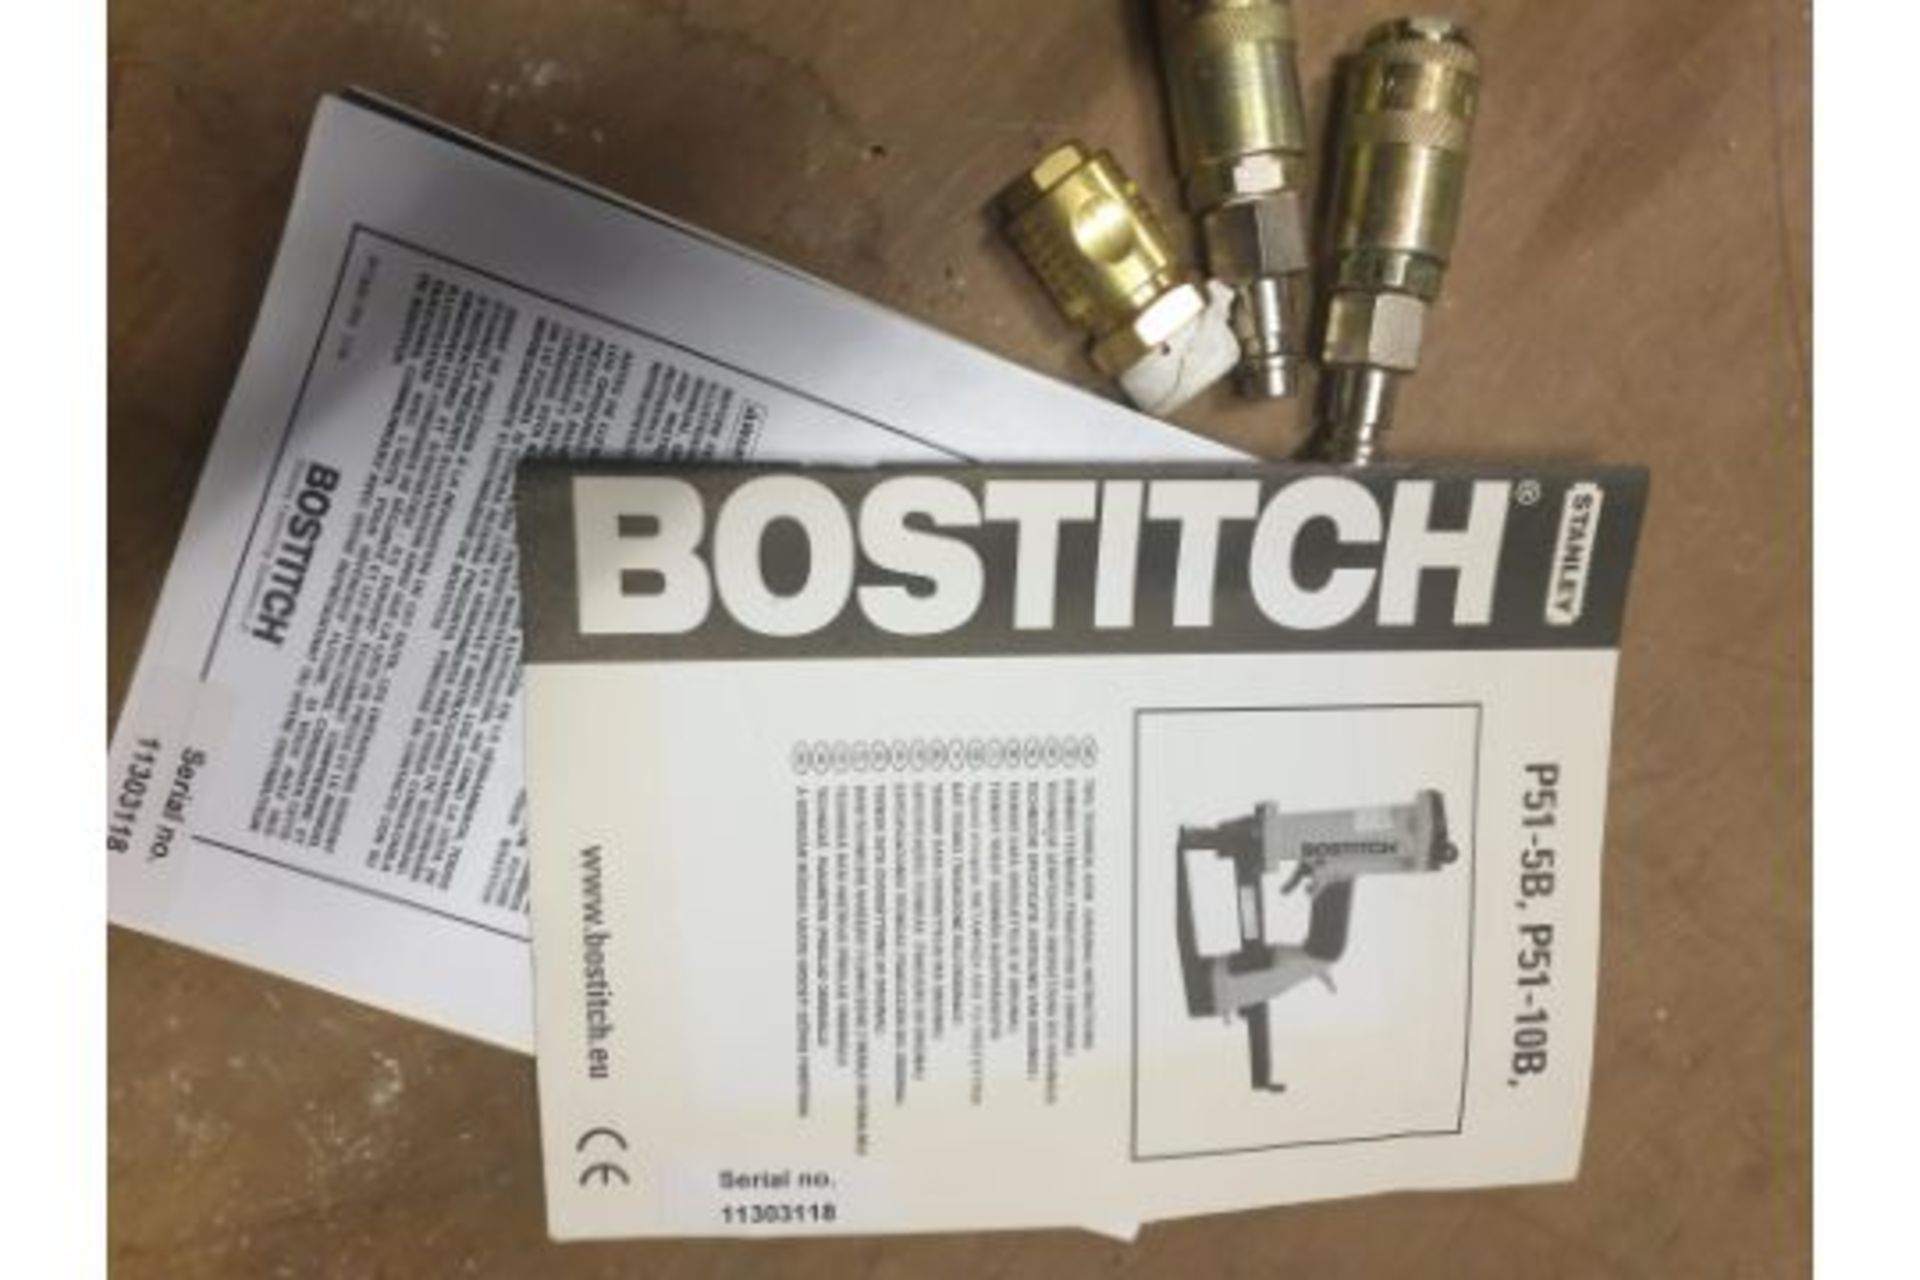 Bostitch P51-10B - Air compressor driven staple gun - Image 2 of 2